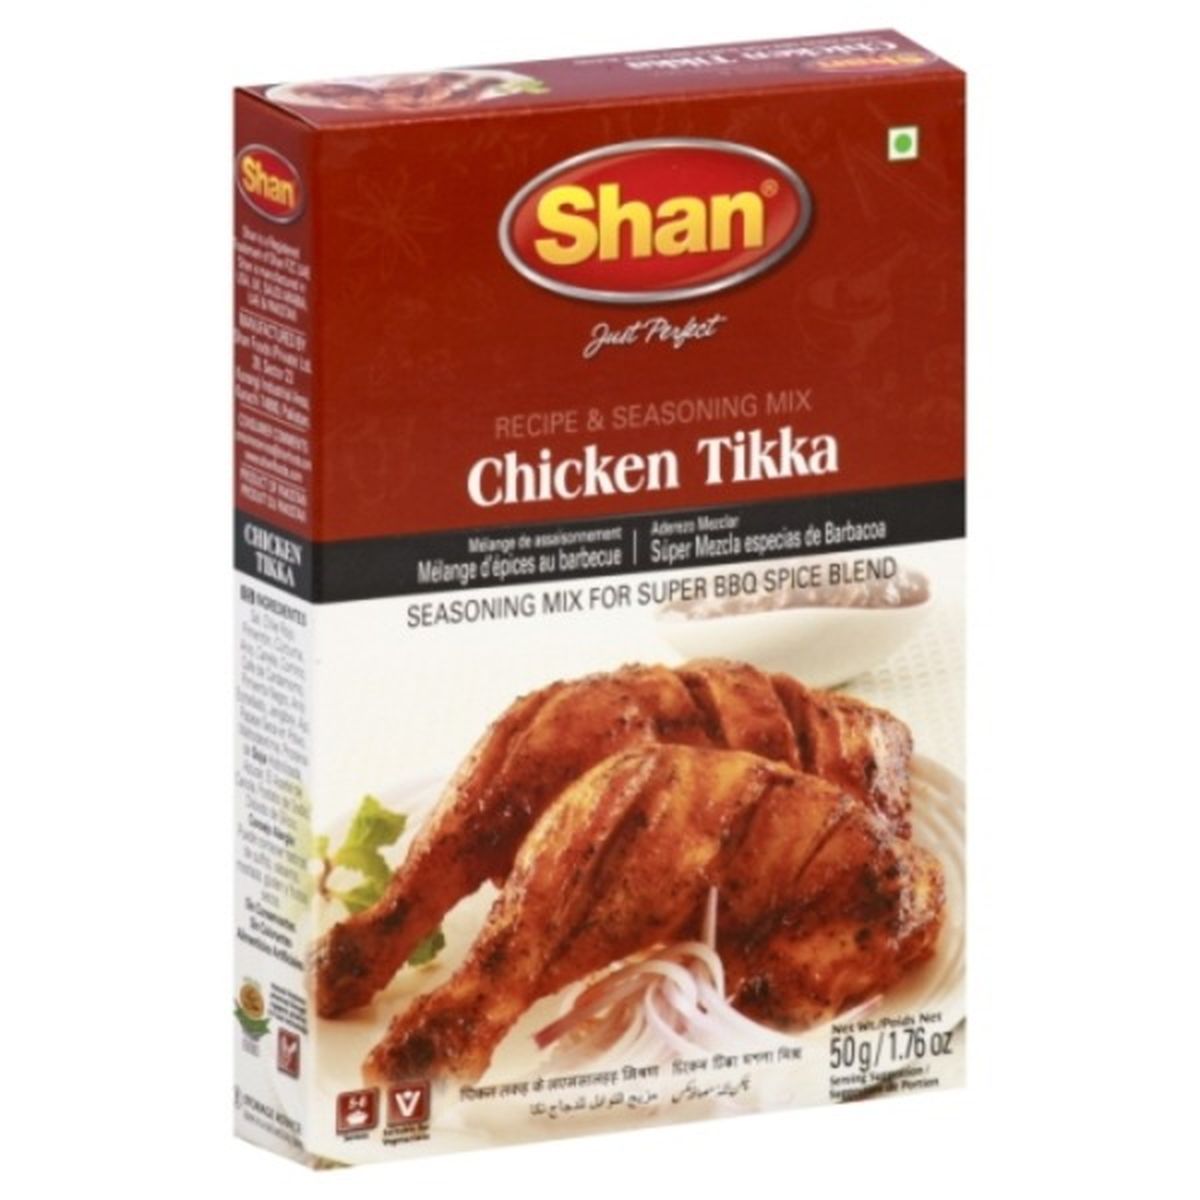 Calories in Shan Just Perfect Recipe & Seasoning Mix, Chicken Tikka